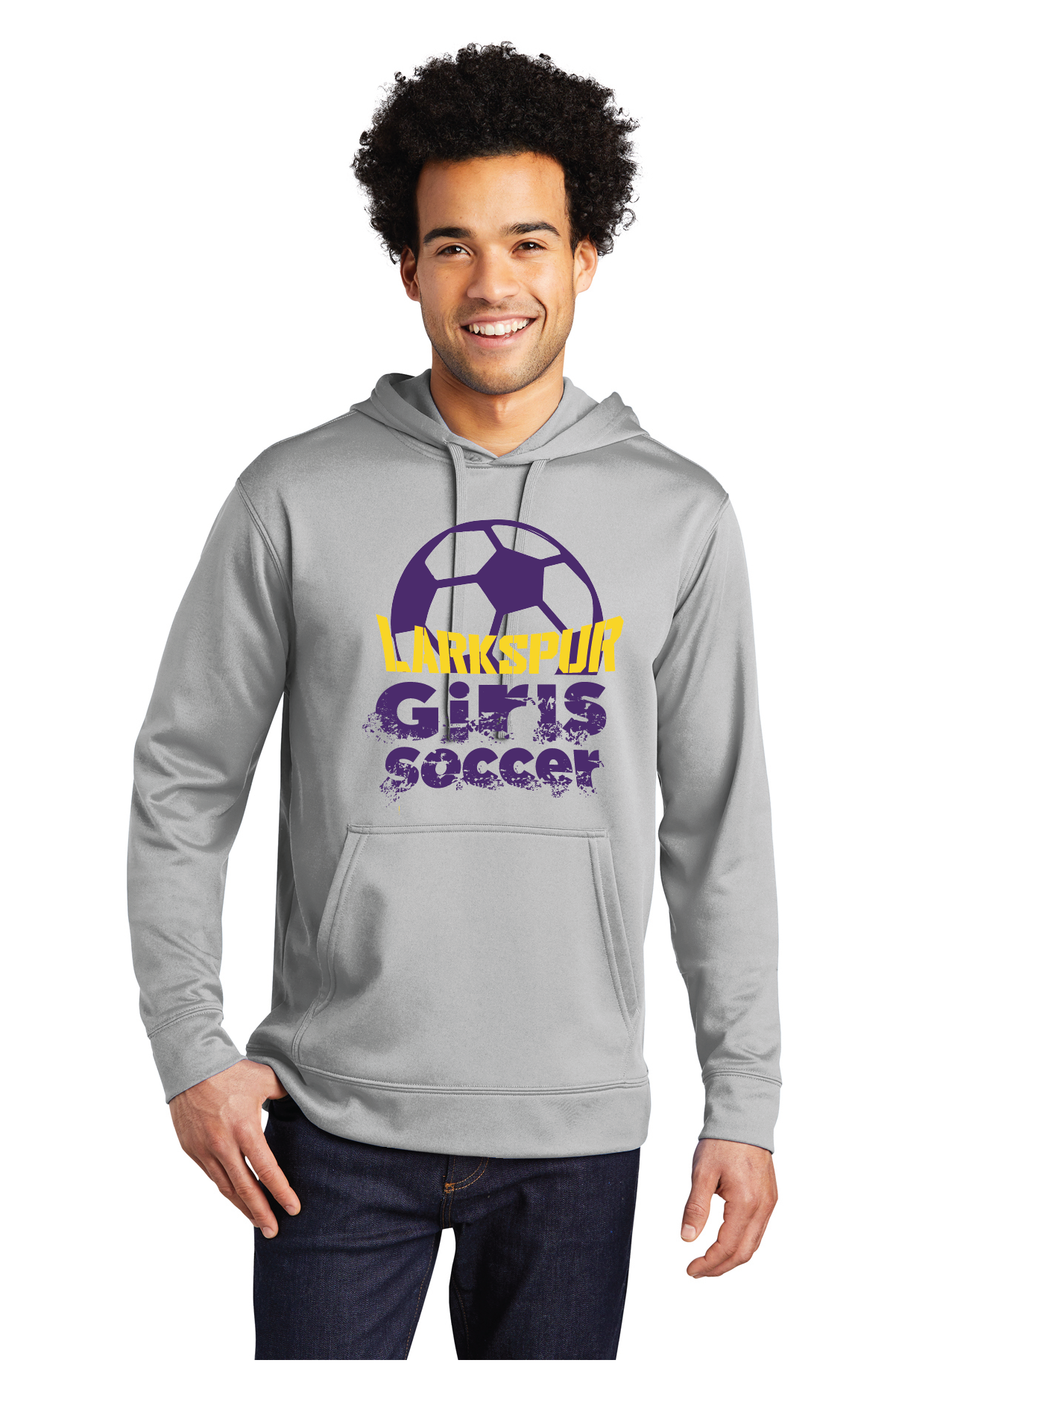 Performance Fleece Pullover Hooded Sweatshirt / Silver / Larkspur Middle School Girls Soccer